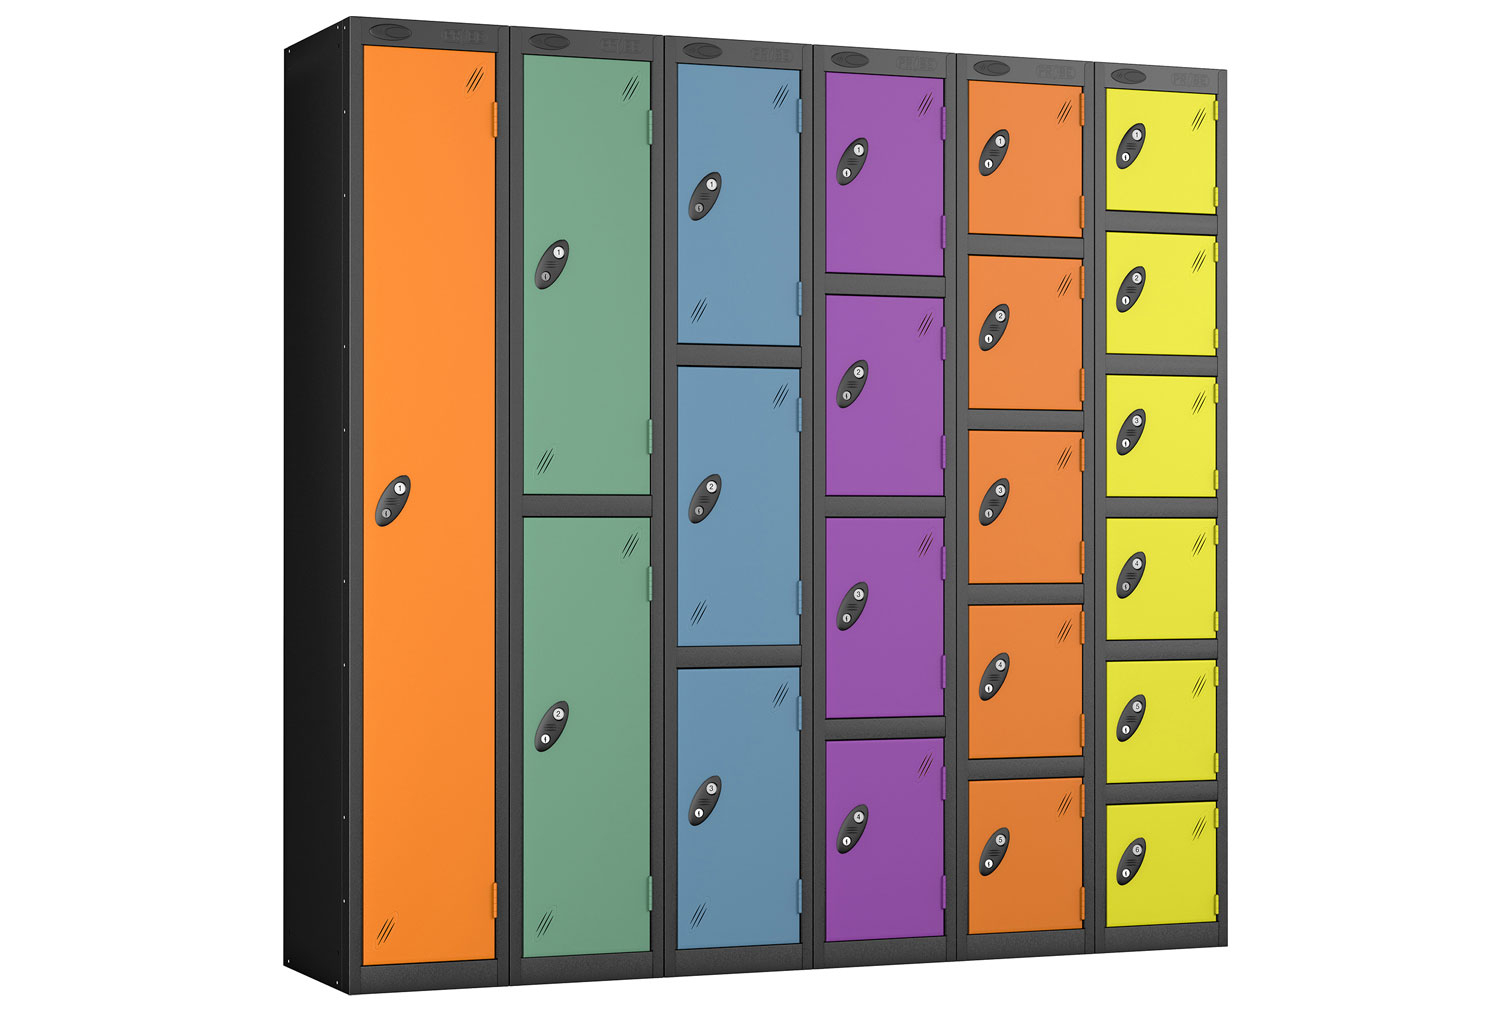 Probe Autumn Colour Lockers With Black Body, 4 Door, 31wx46dx178h (cm), Combination Lock, Black Body, Lilac